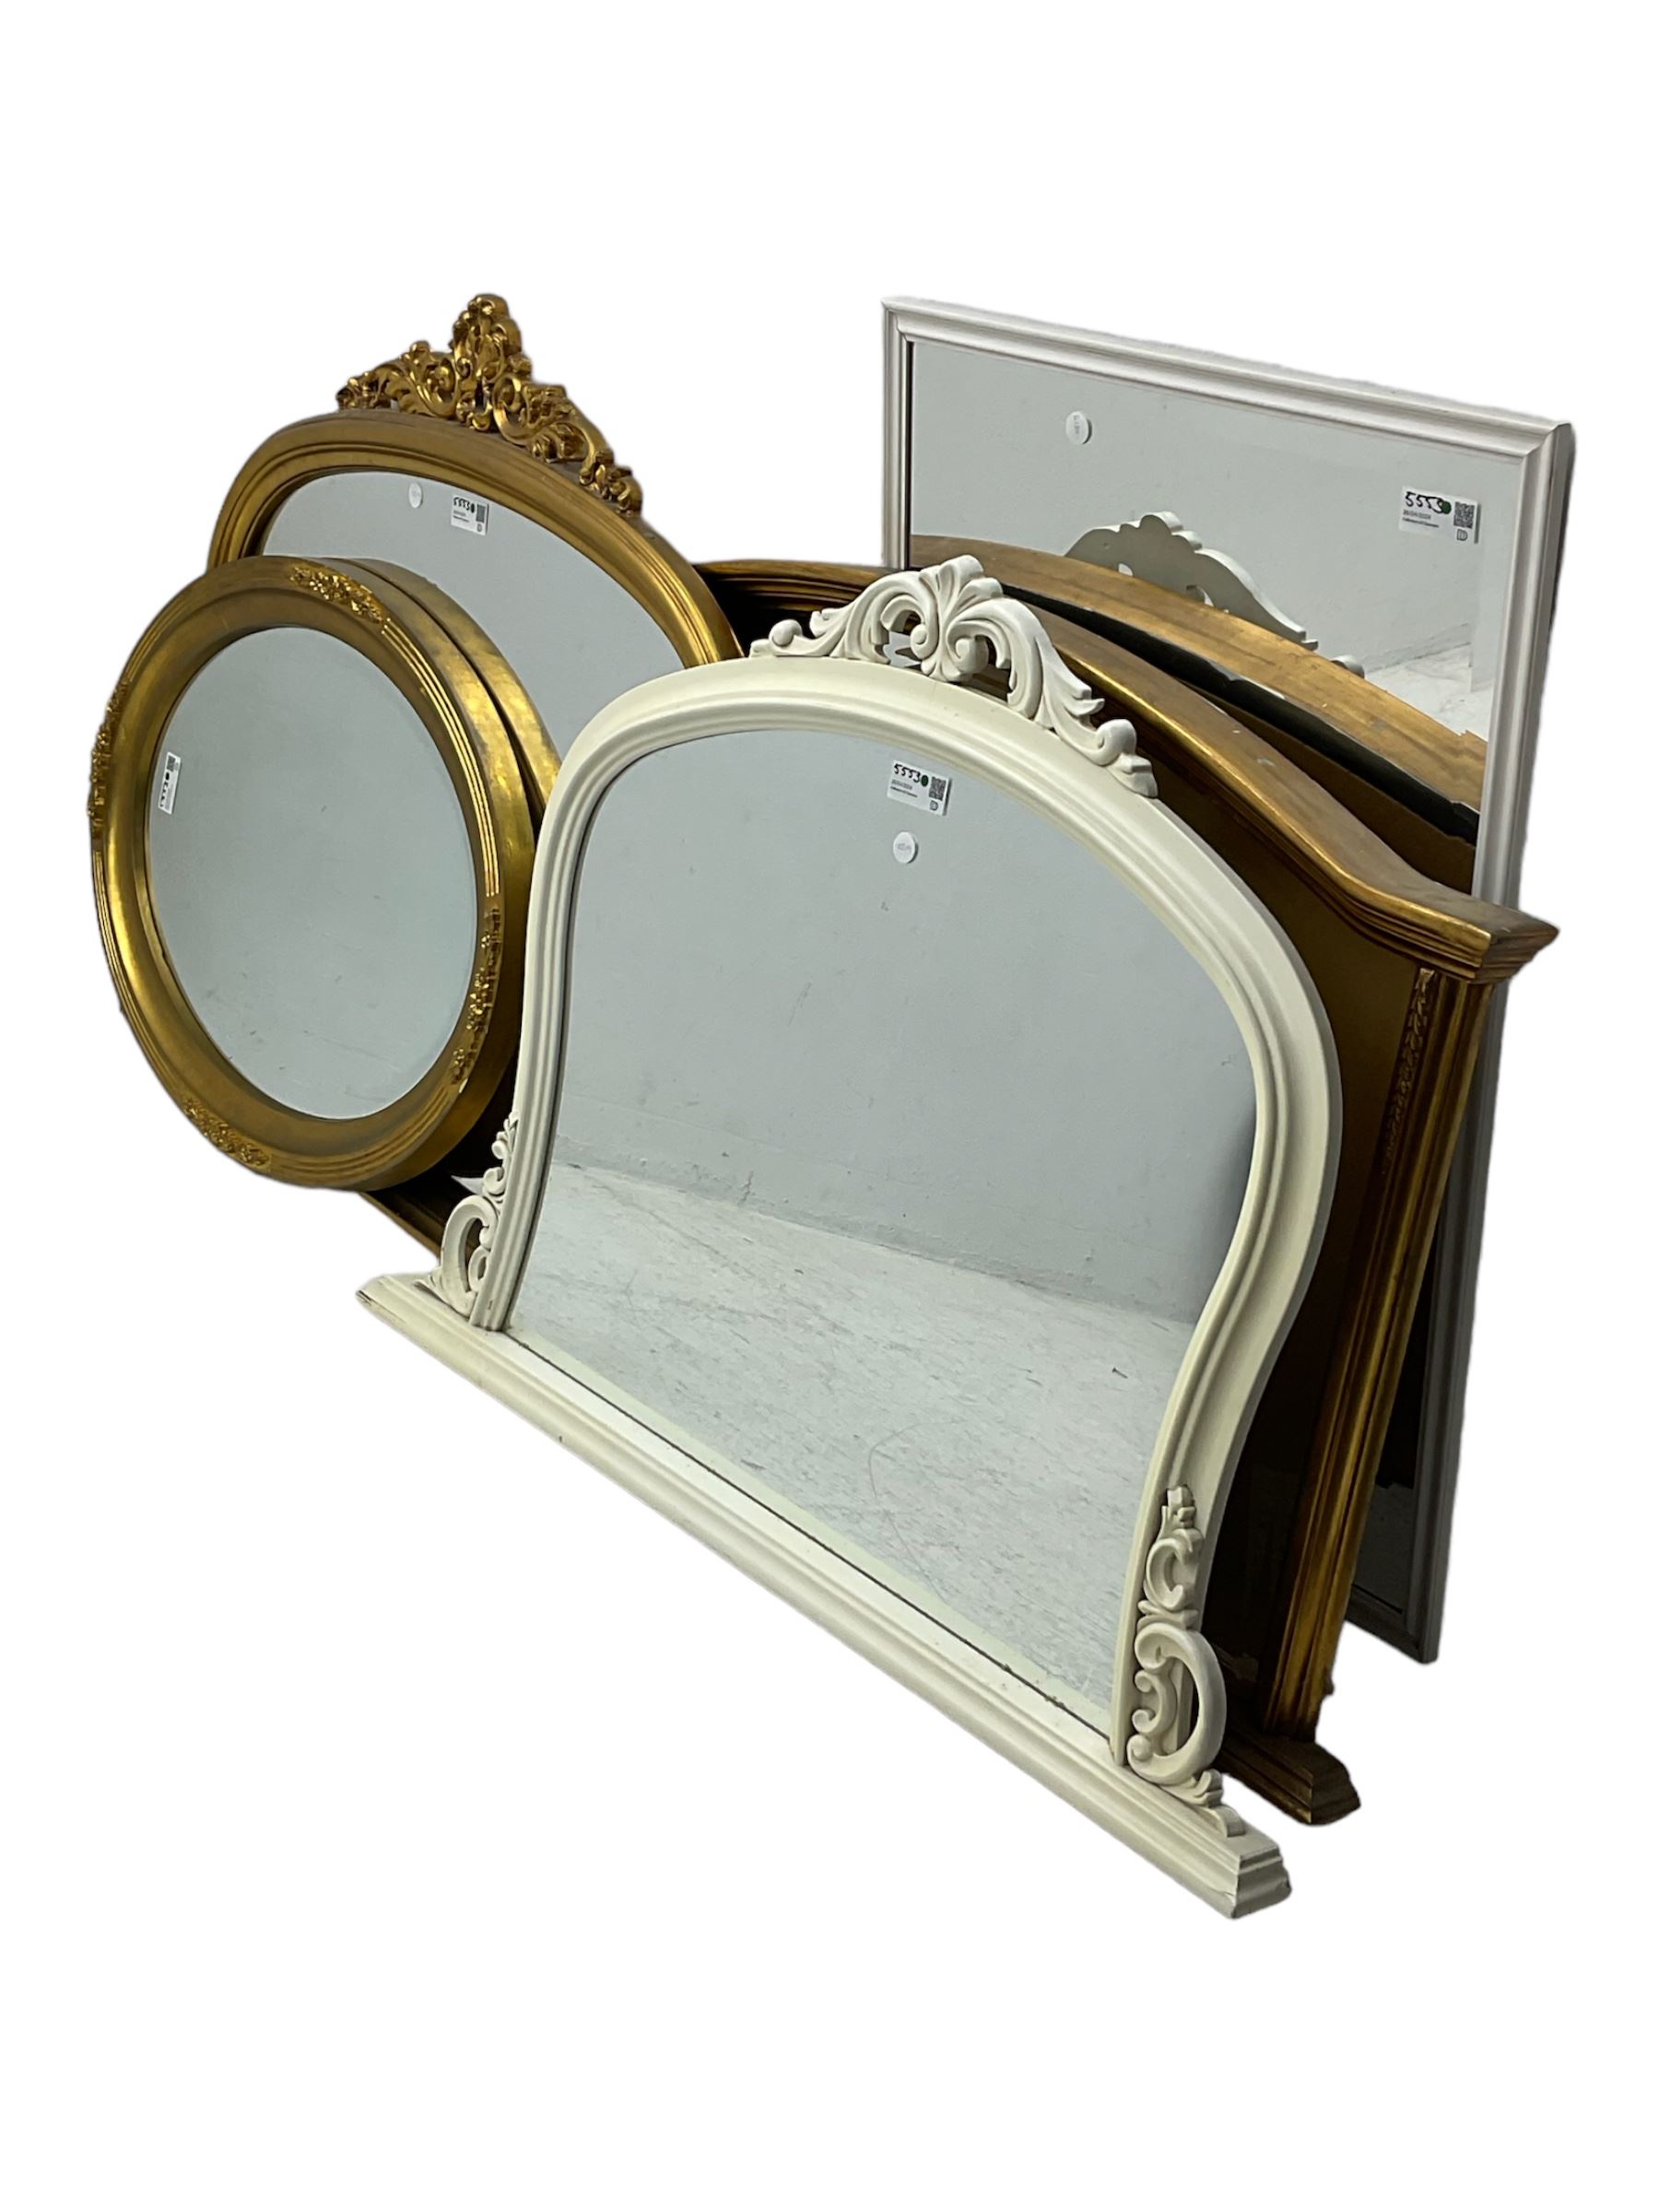 Gilt framed overmantel mirror (122cm x 77cm); gilt framed overmantel mirror with ornate pediment (12